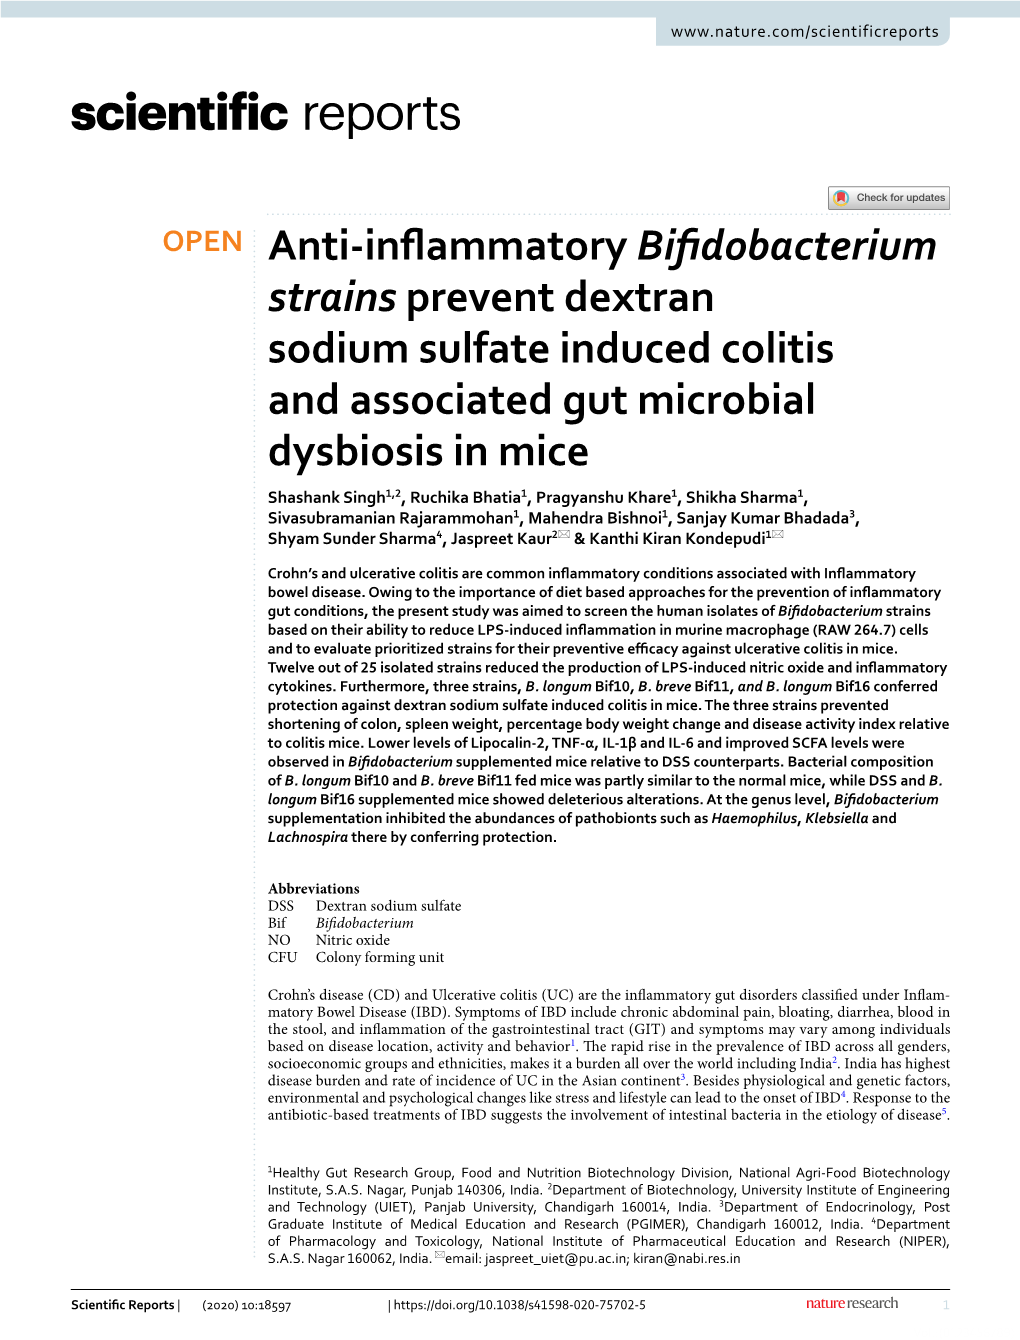 Anti-Inflammatory Bifidobacterium Strains Prevent Dextran Sodium